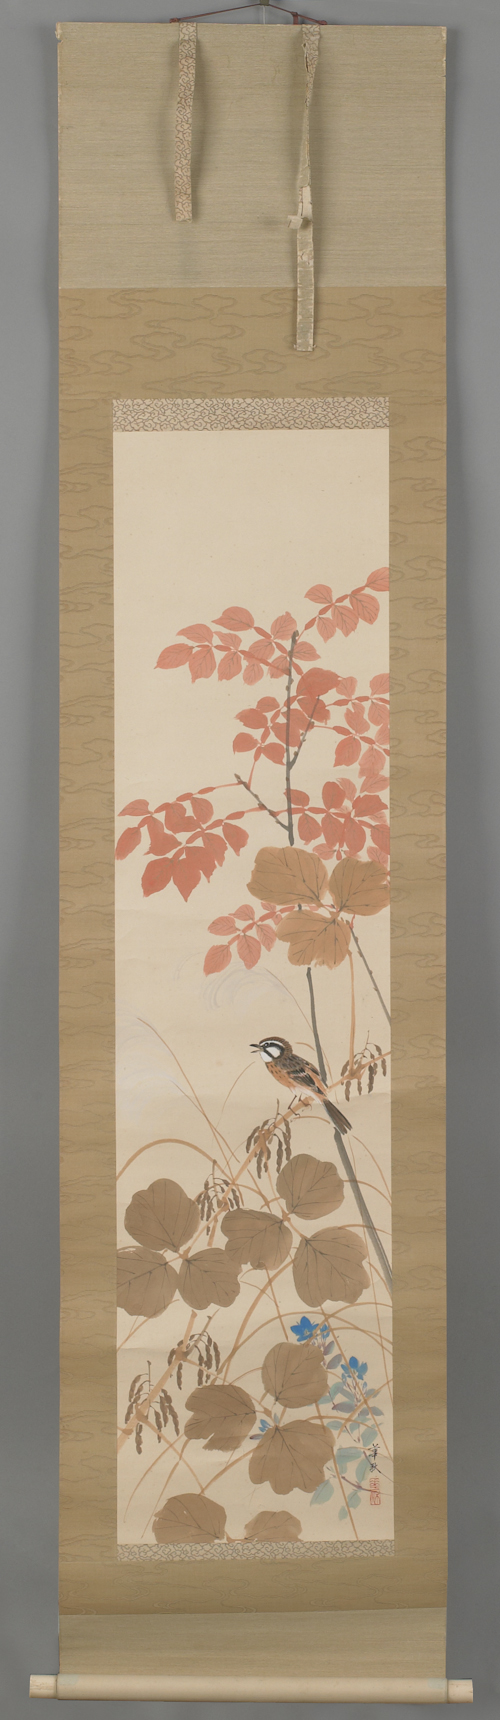 Japanese watercolor on silk scroll